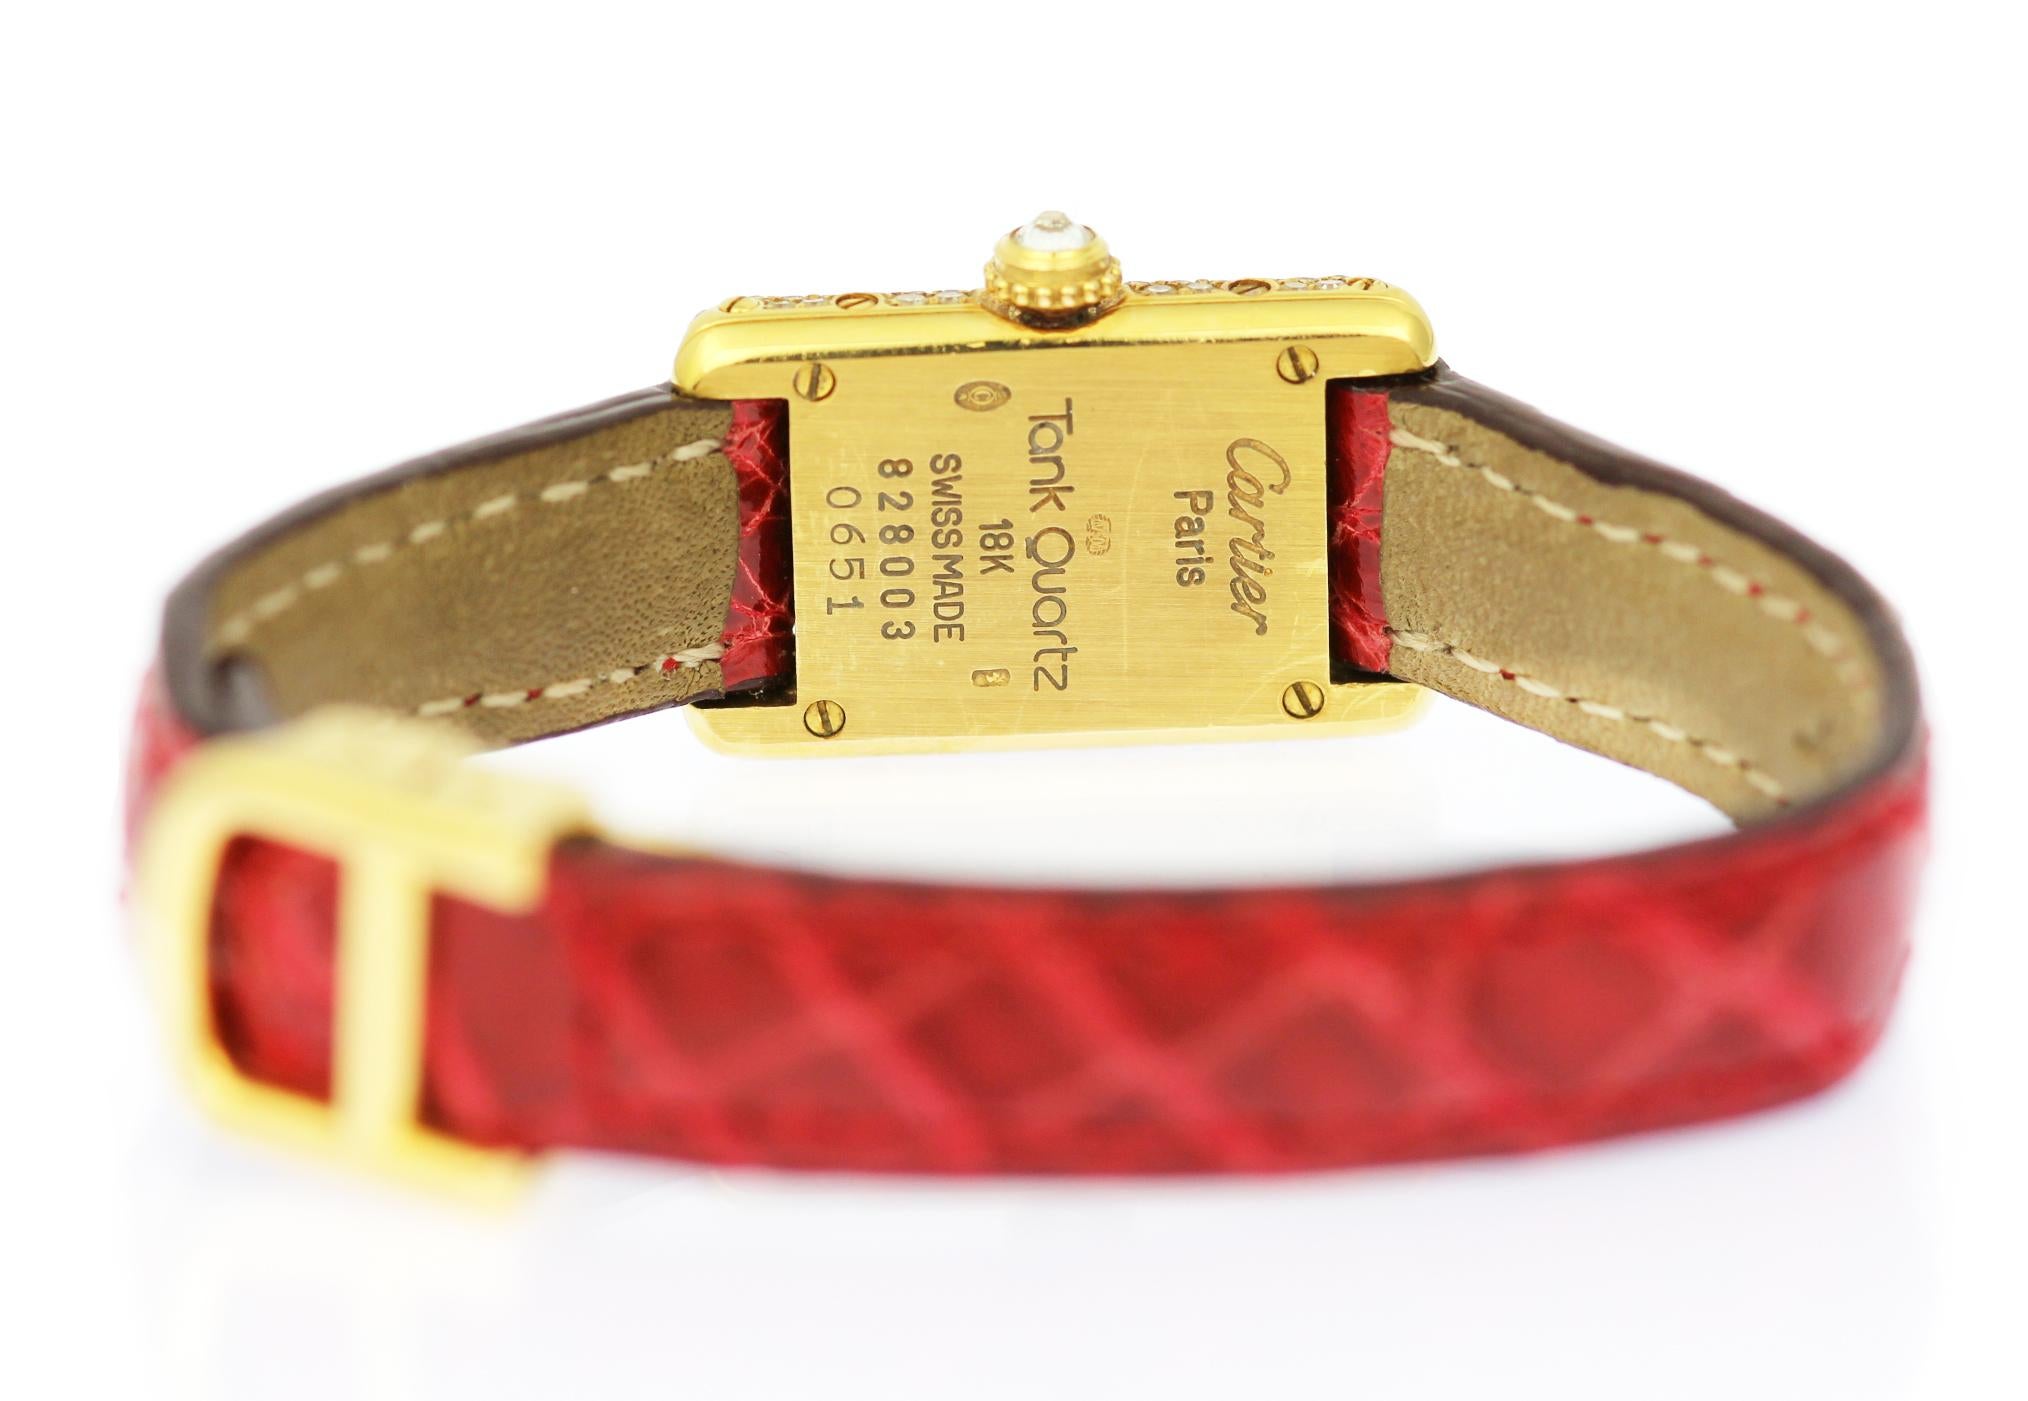 Women's Cartier Ladies Tank Watch in 18K Yellow Gold & Diamonds, Original Box